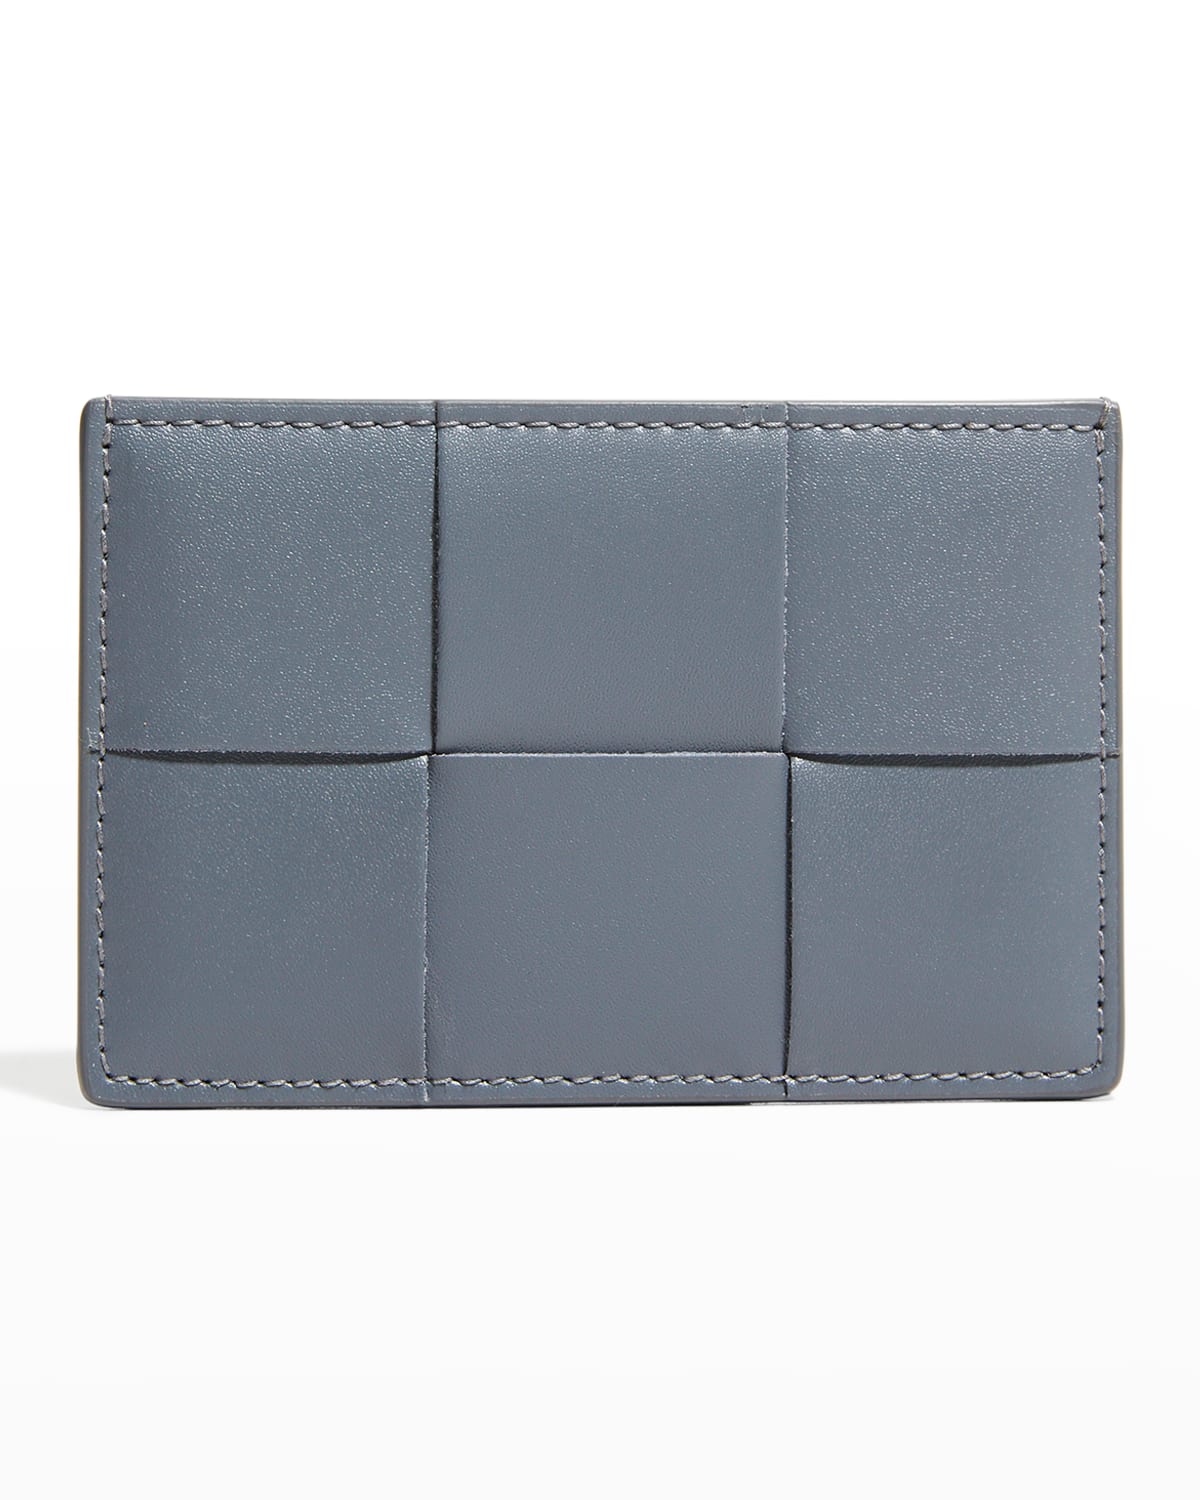 Bottega Veneta Men's Giant Intrecciato Leather Card Case